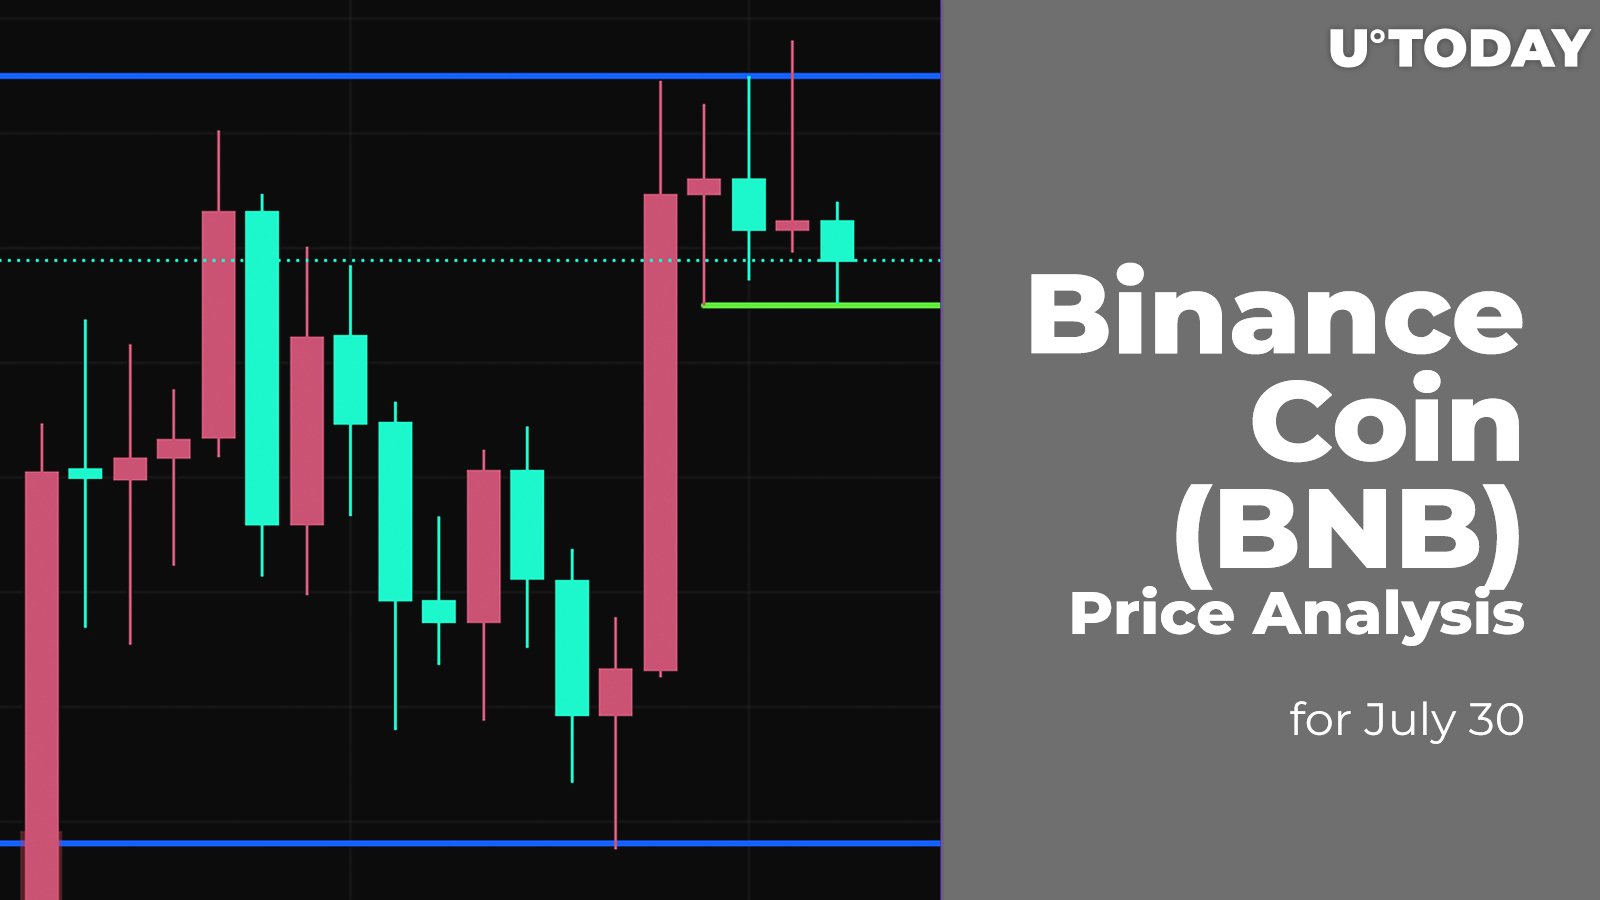 Binance Coin (BNB) Price Analysis for July 30